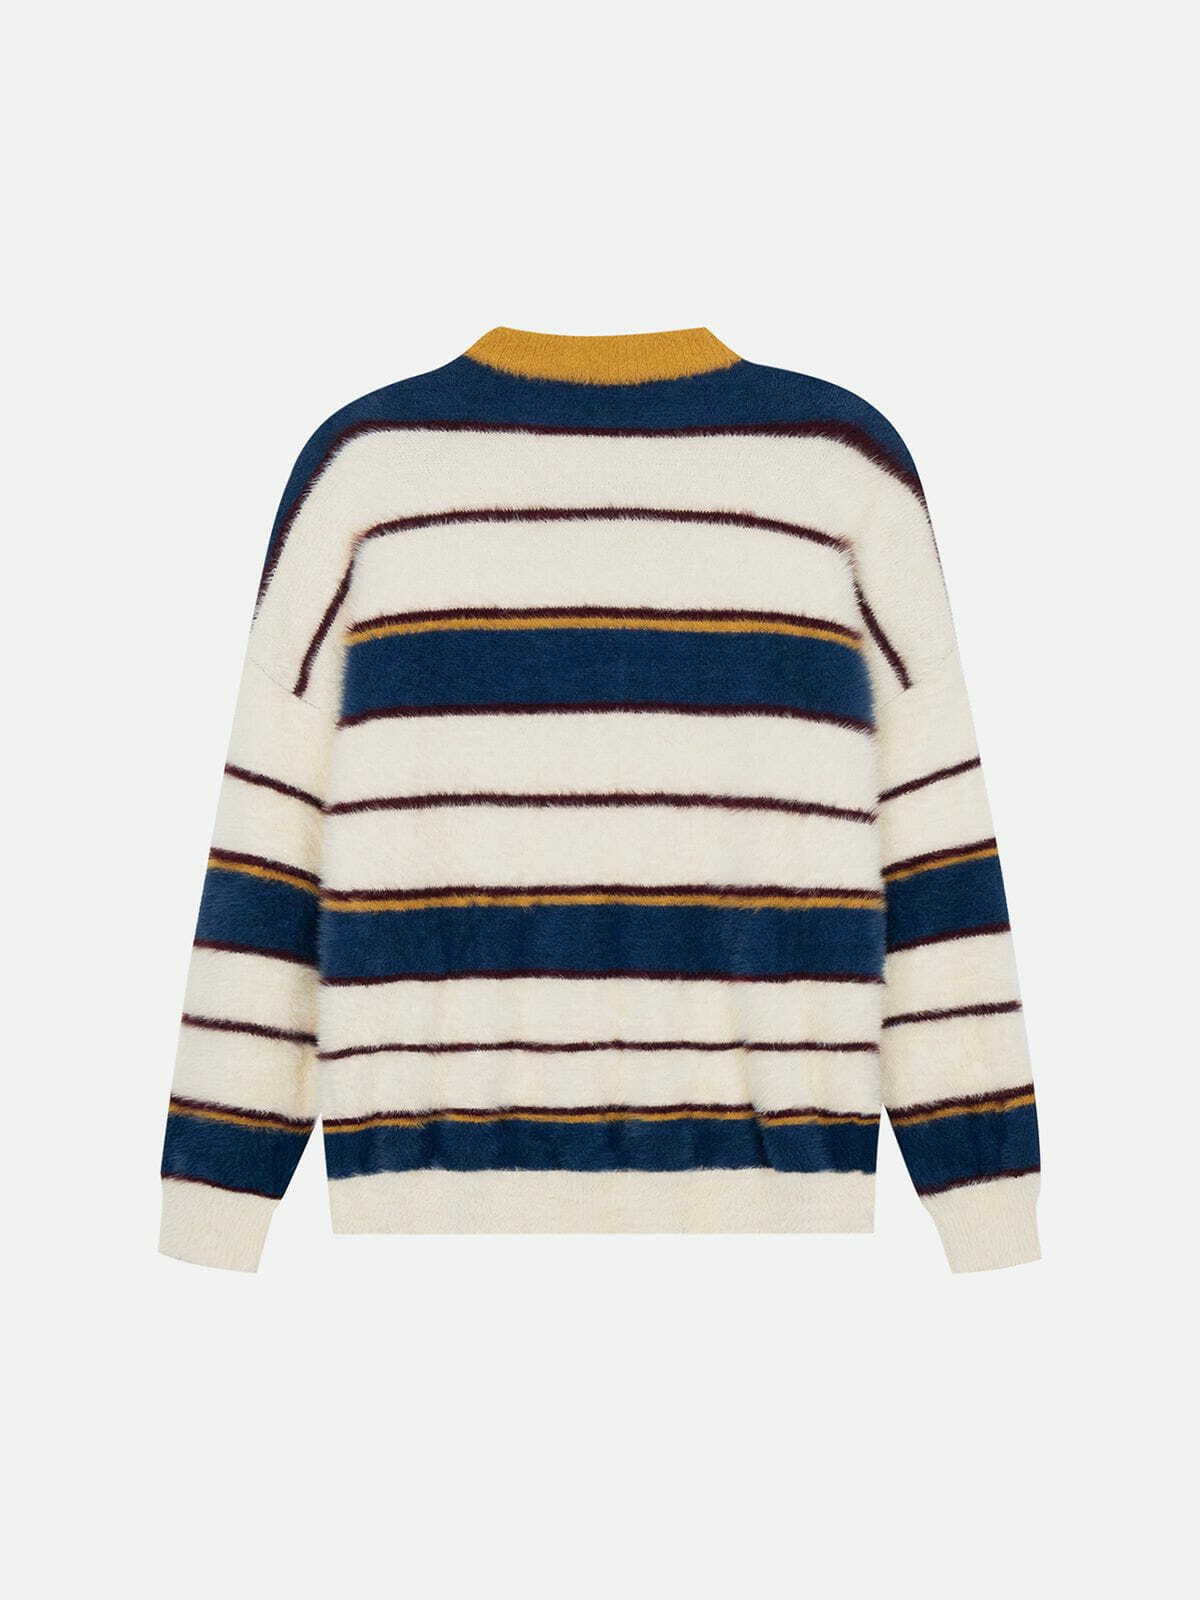 colorful striped knit sweater retro chic statement 3957